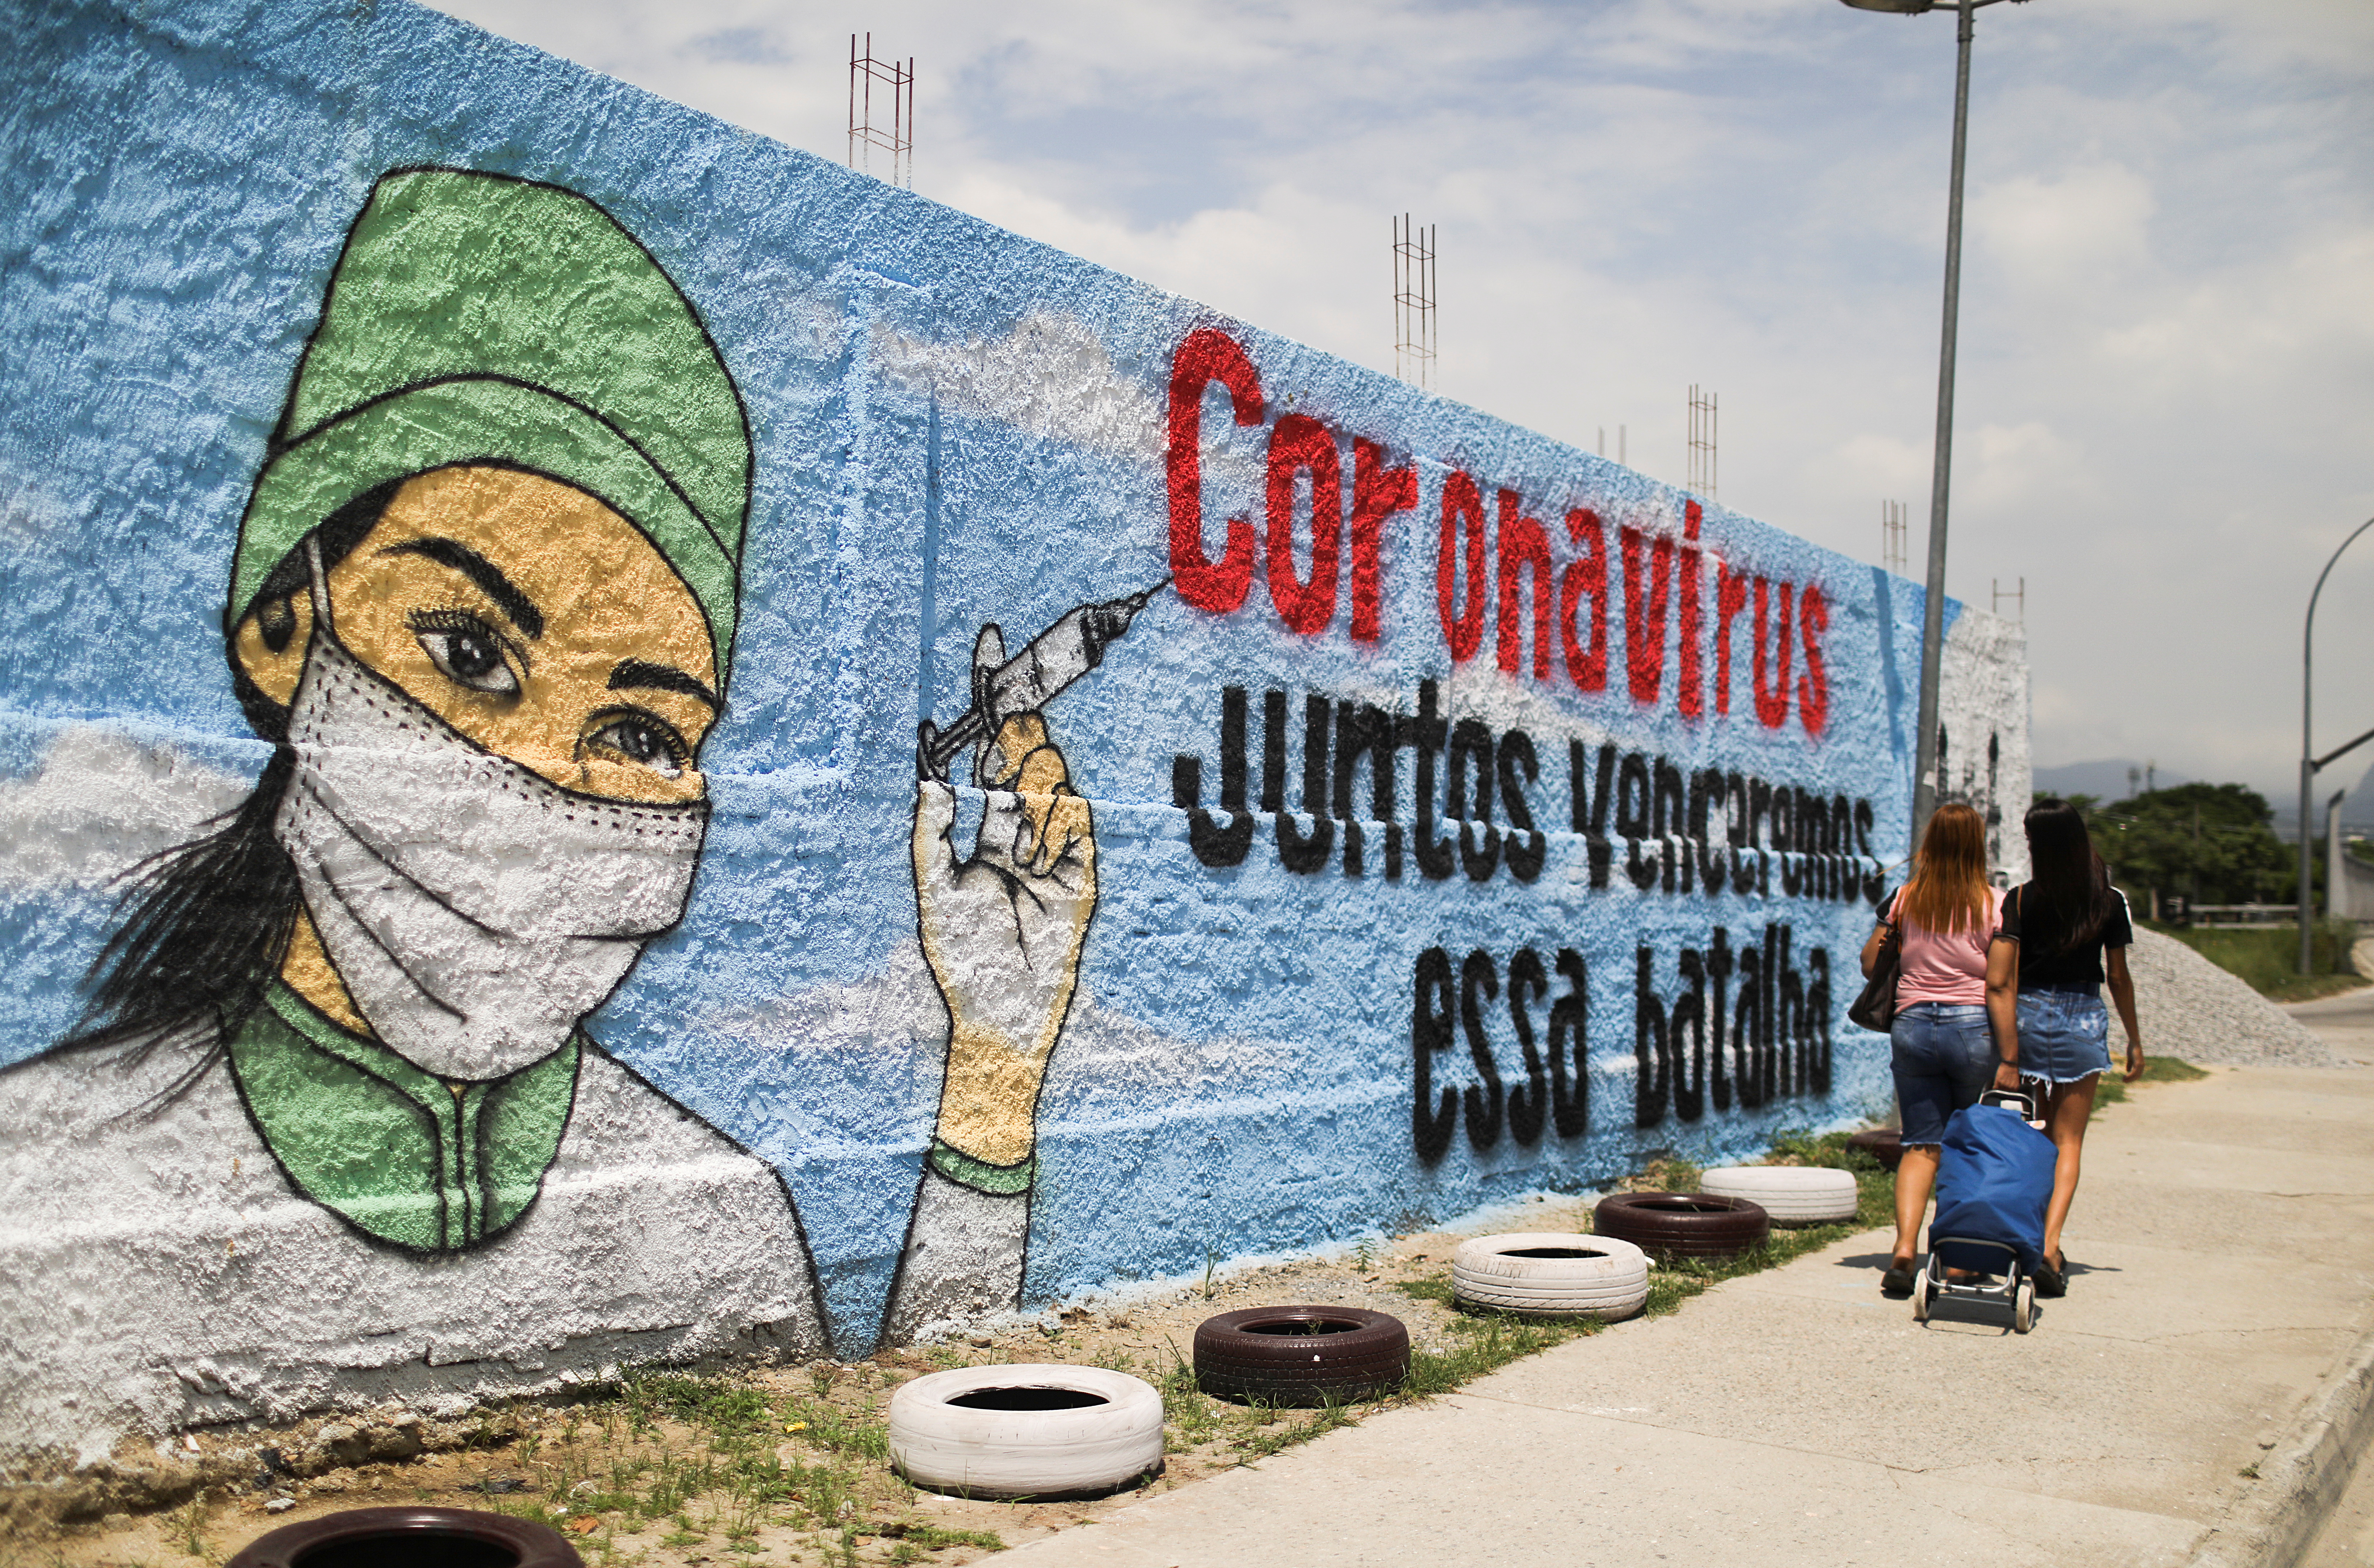 People walk past a graffiti amidst the spread of the coronavirus disease (COVID-19) in Rio de Janeiro, Brazil March 12, 2021. The graffiti reads: "Coronavirus, together we will win that battle". REUTERS/Pilar Olivares